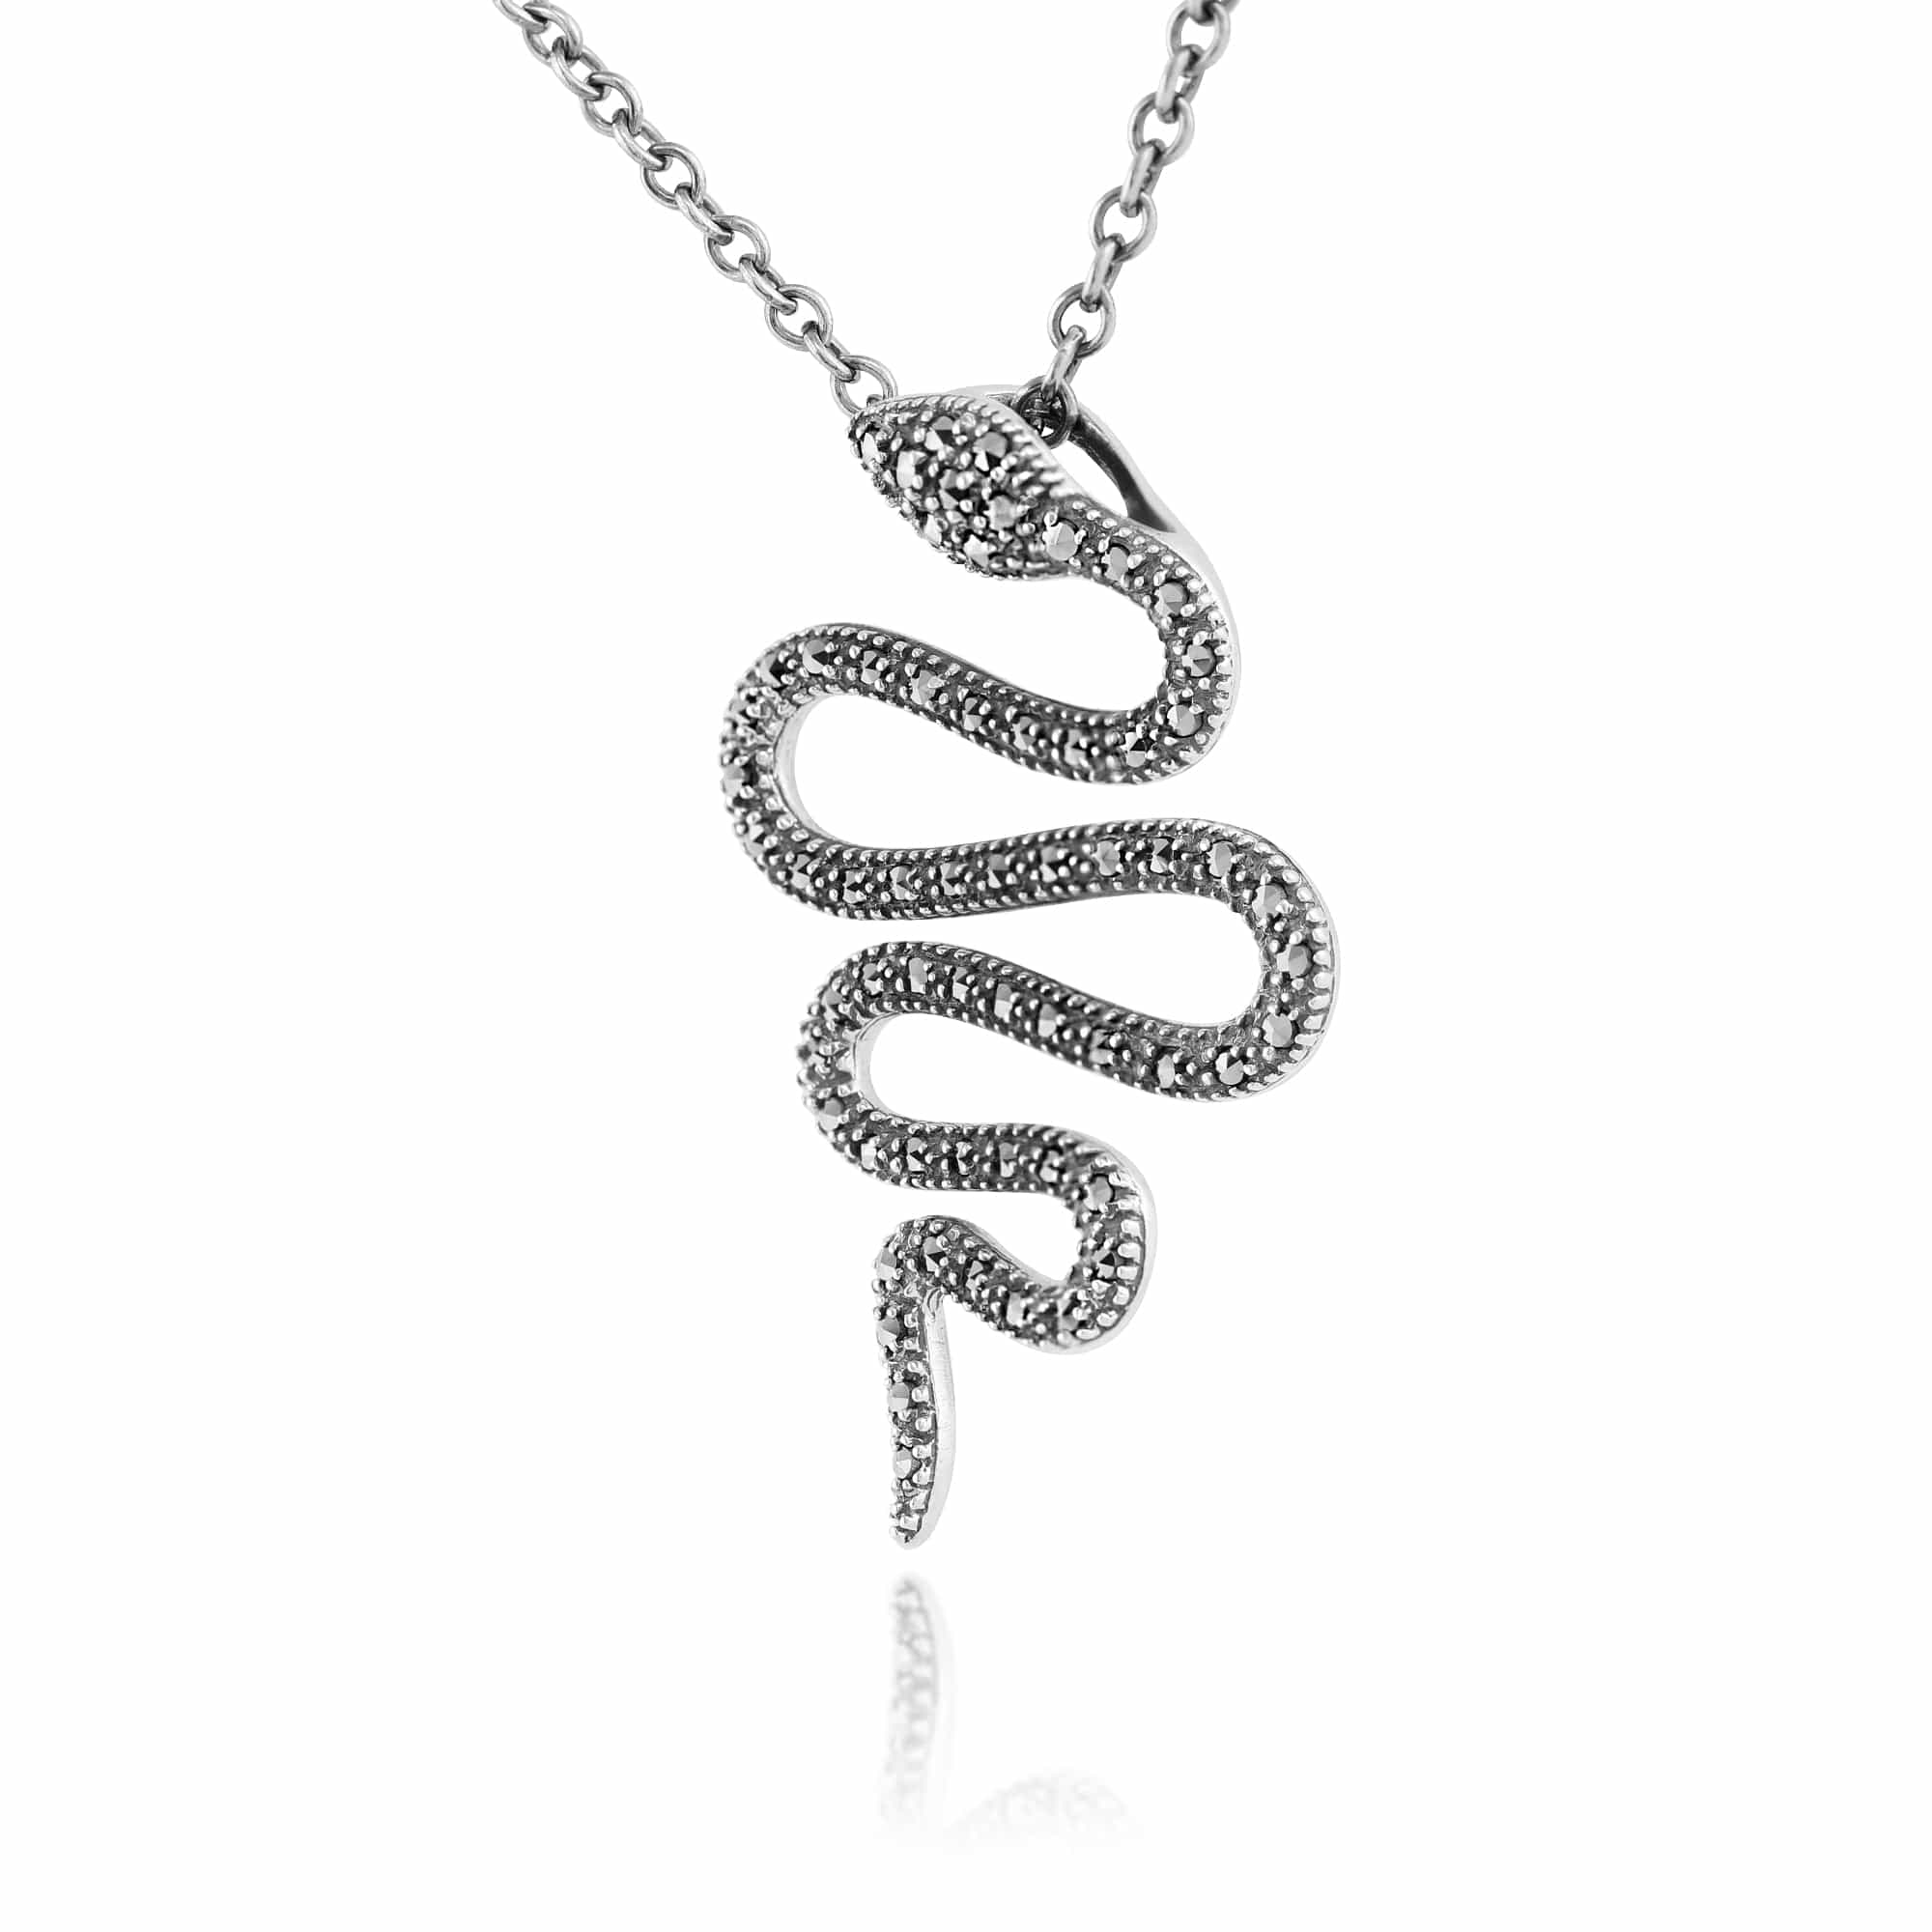 214E816701925-214N672601925 Art Nouveau Style Style Round Marcasite Snake Drop Earrings & Pendant Set in 925 Sterling Silver 5